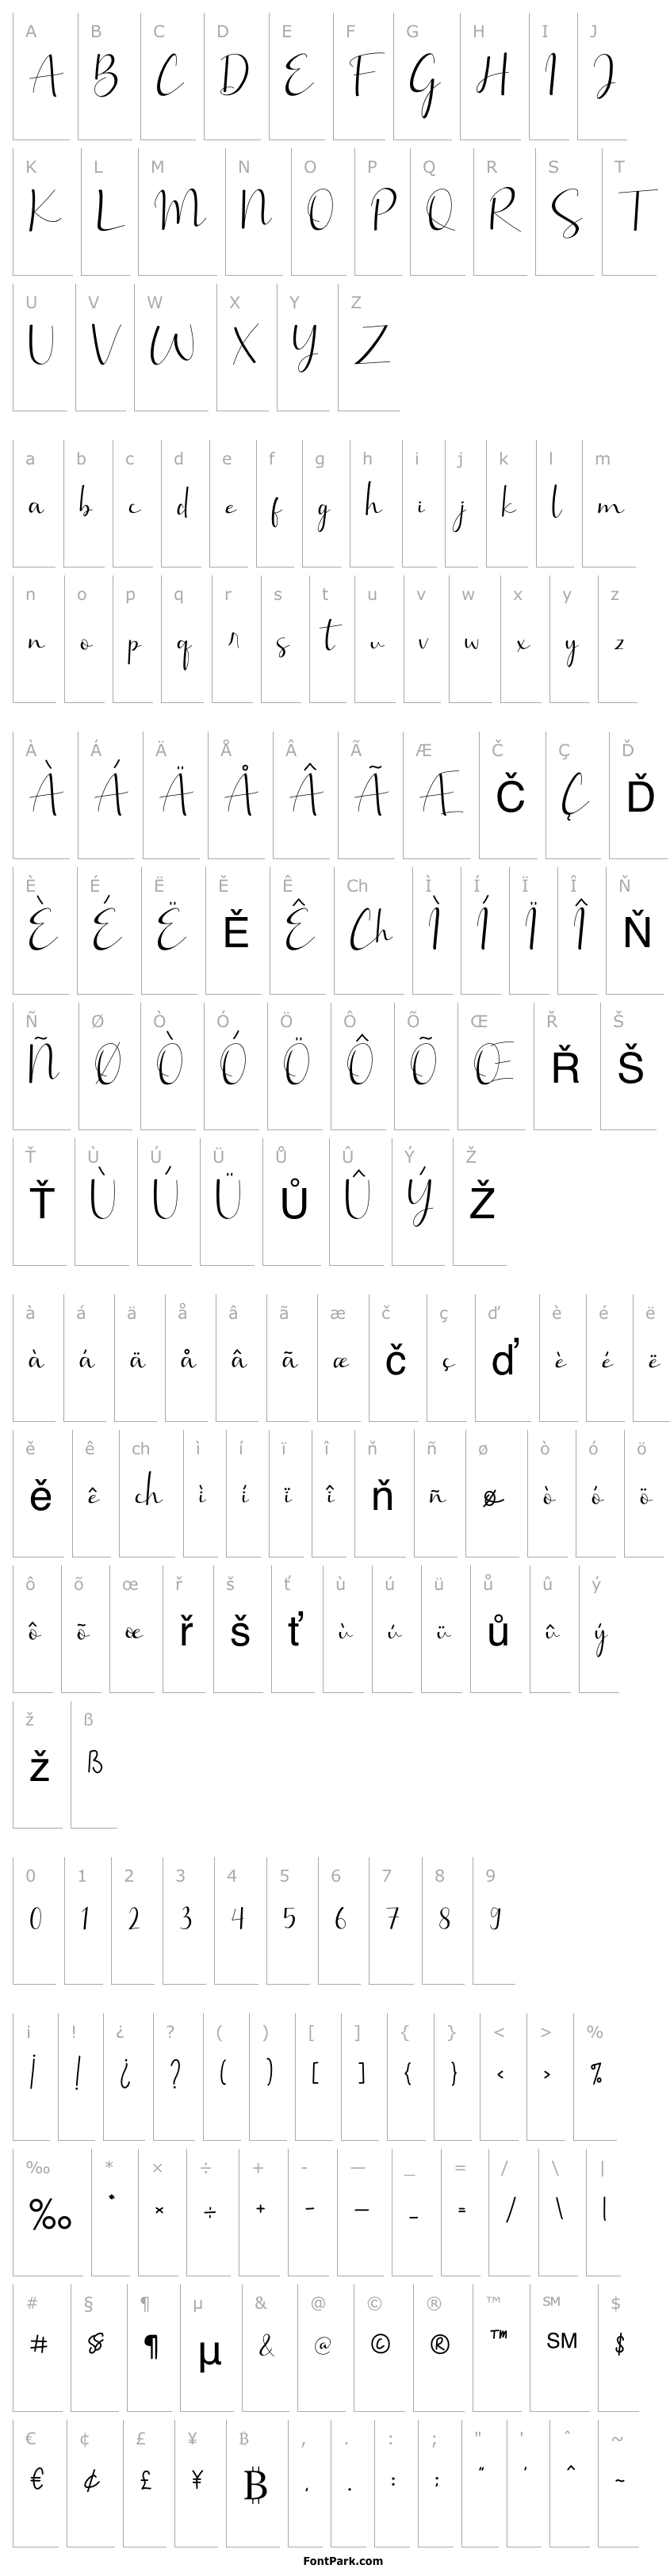 Overview Brillia Calligraphy